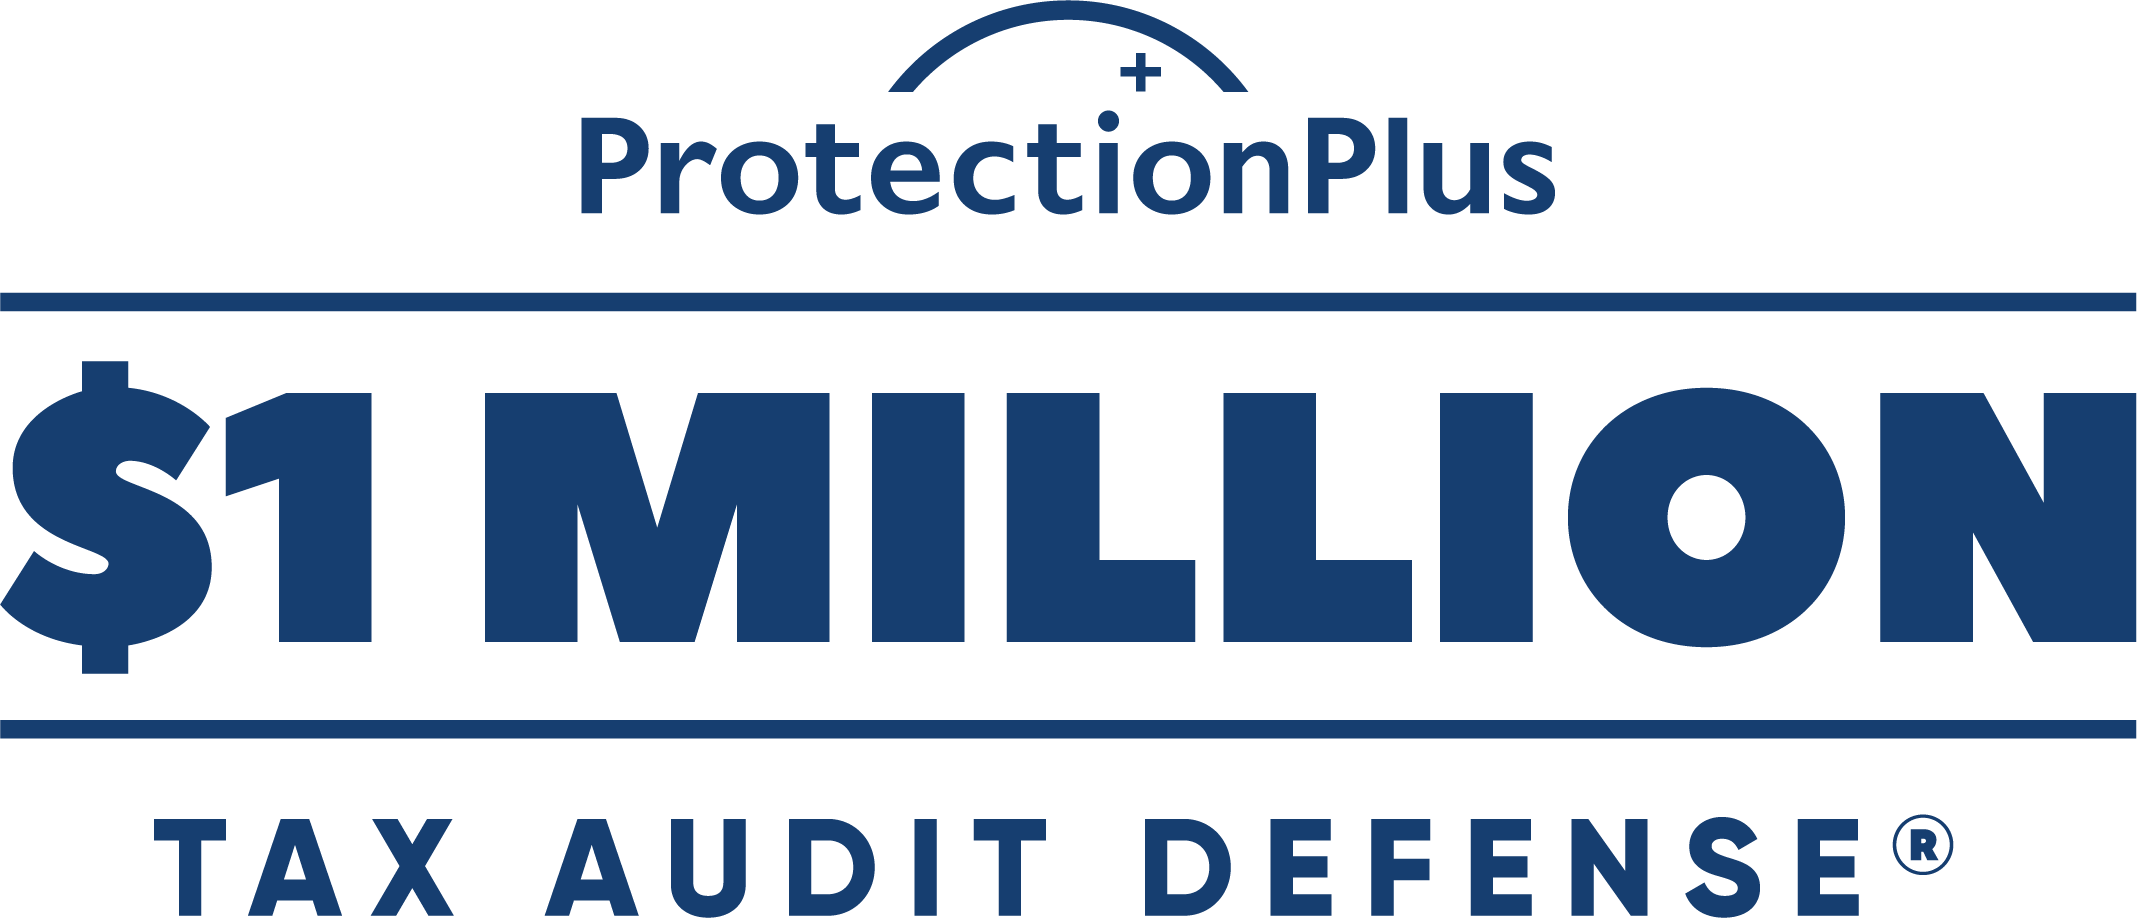 ProtectionPlus logo